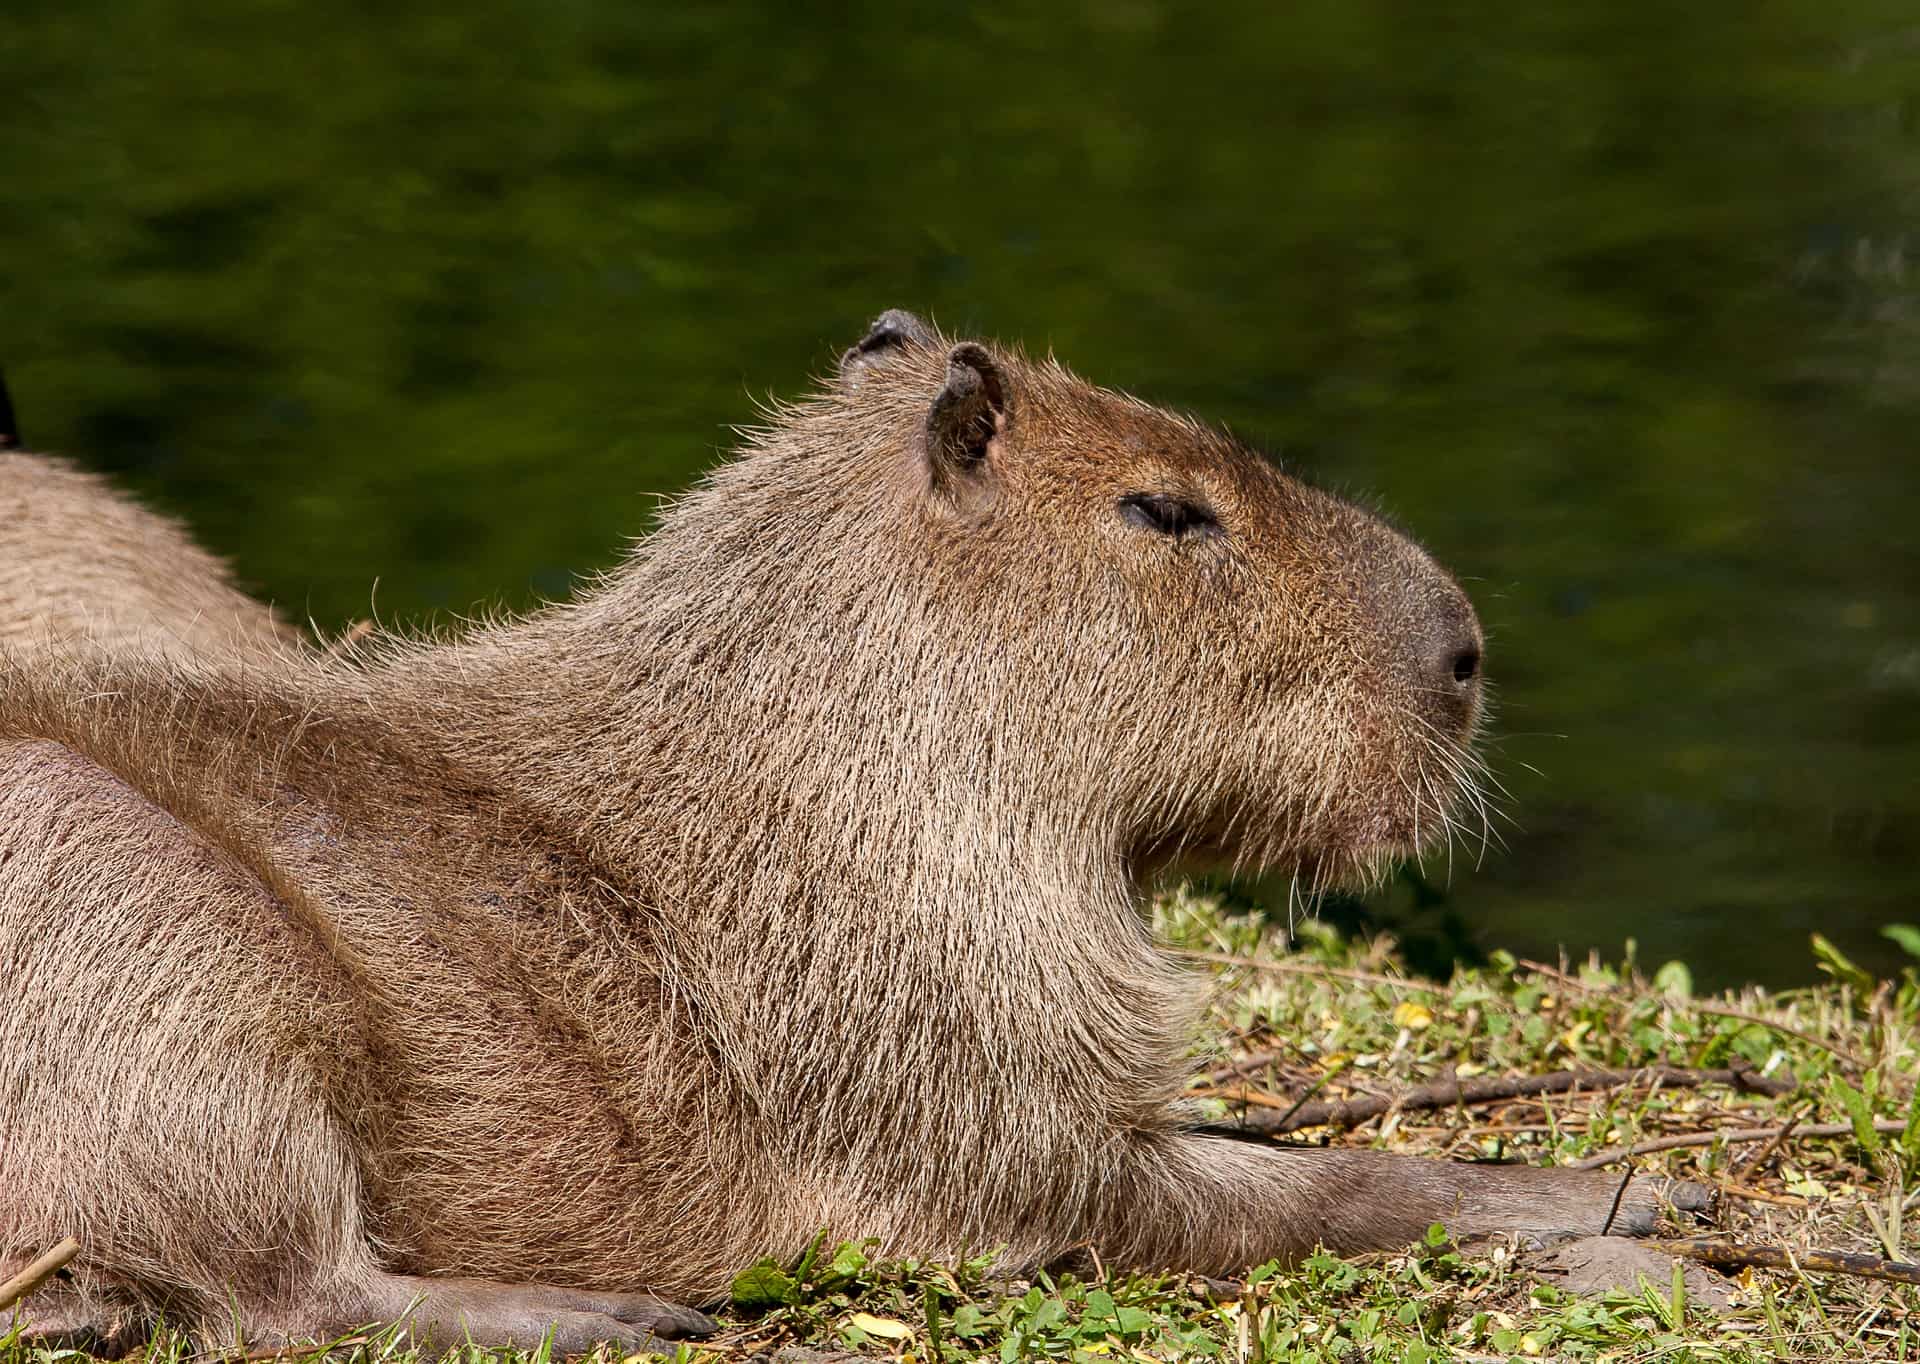 Capybara Facts (Hydrochoerus hydrochaeris)